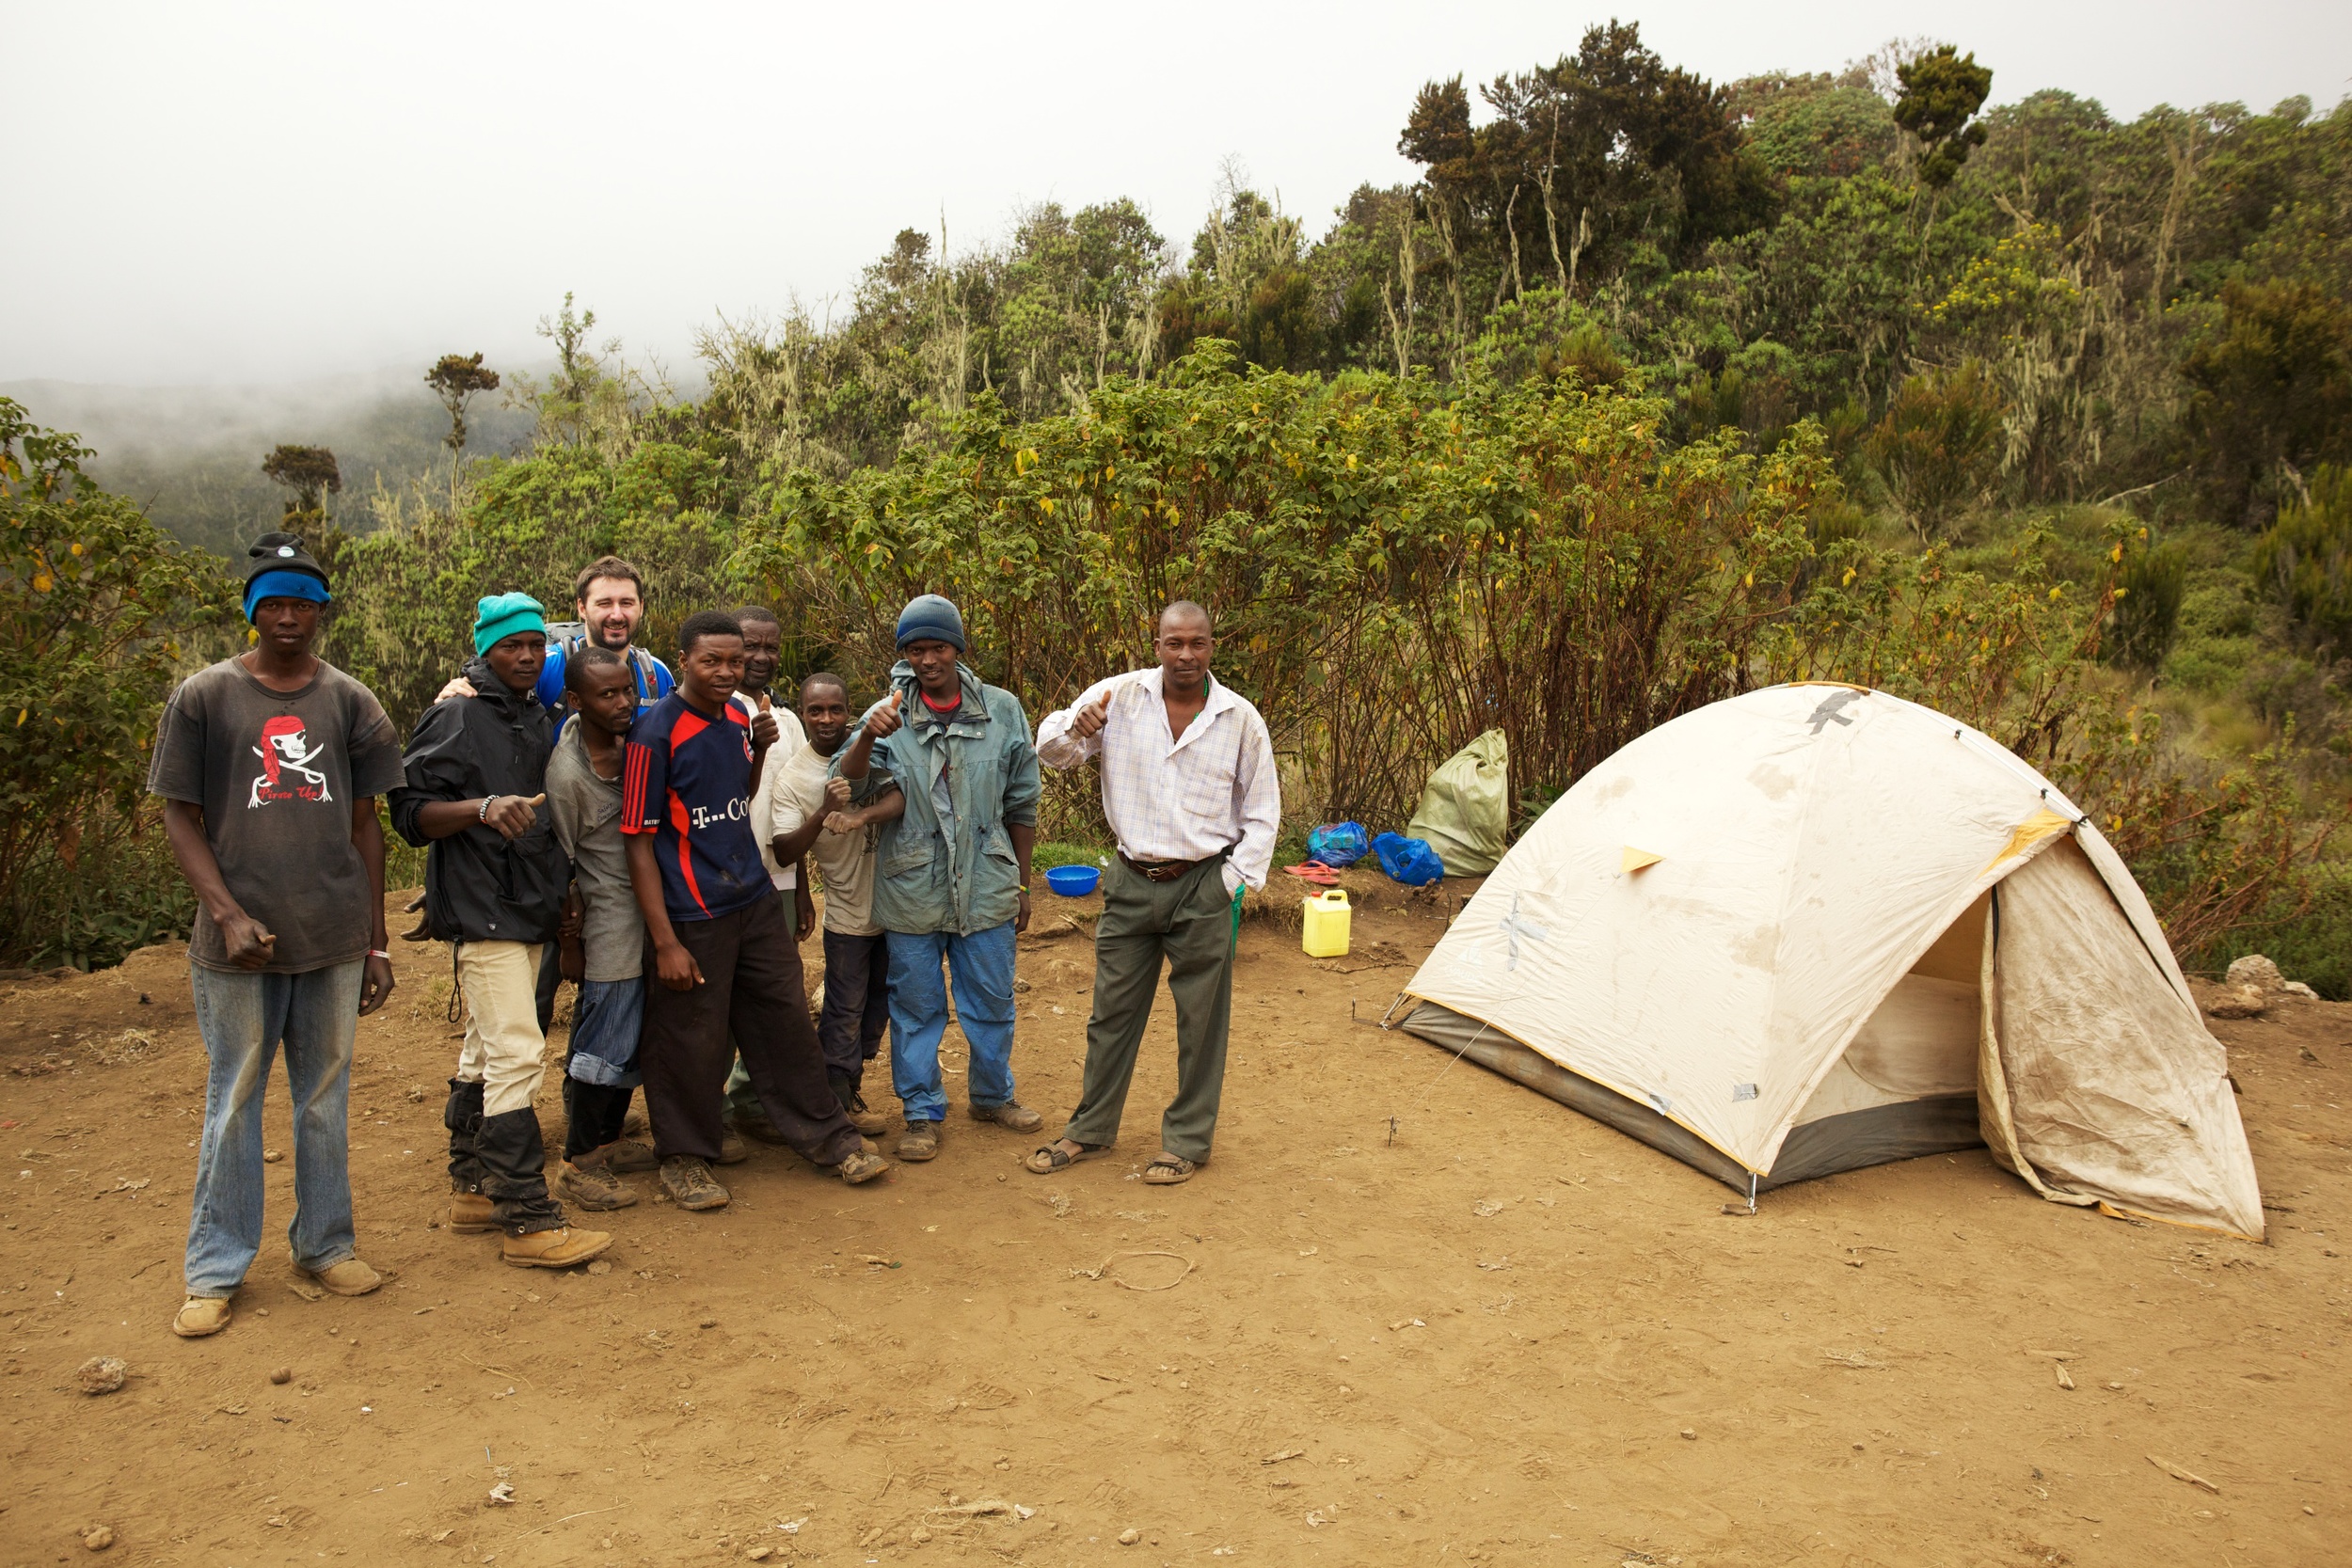 Machame Hut Camp, Kilimanjaro (TZ), Sep 2012